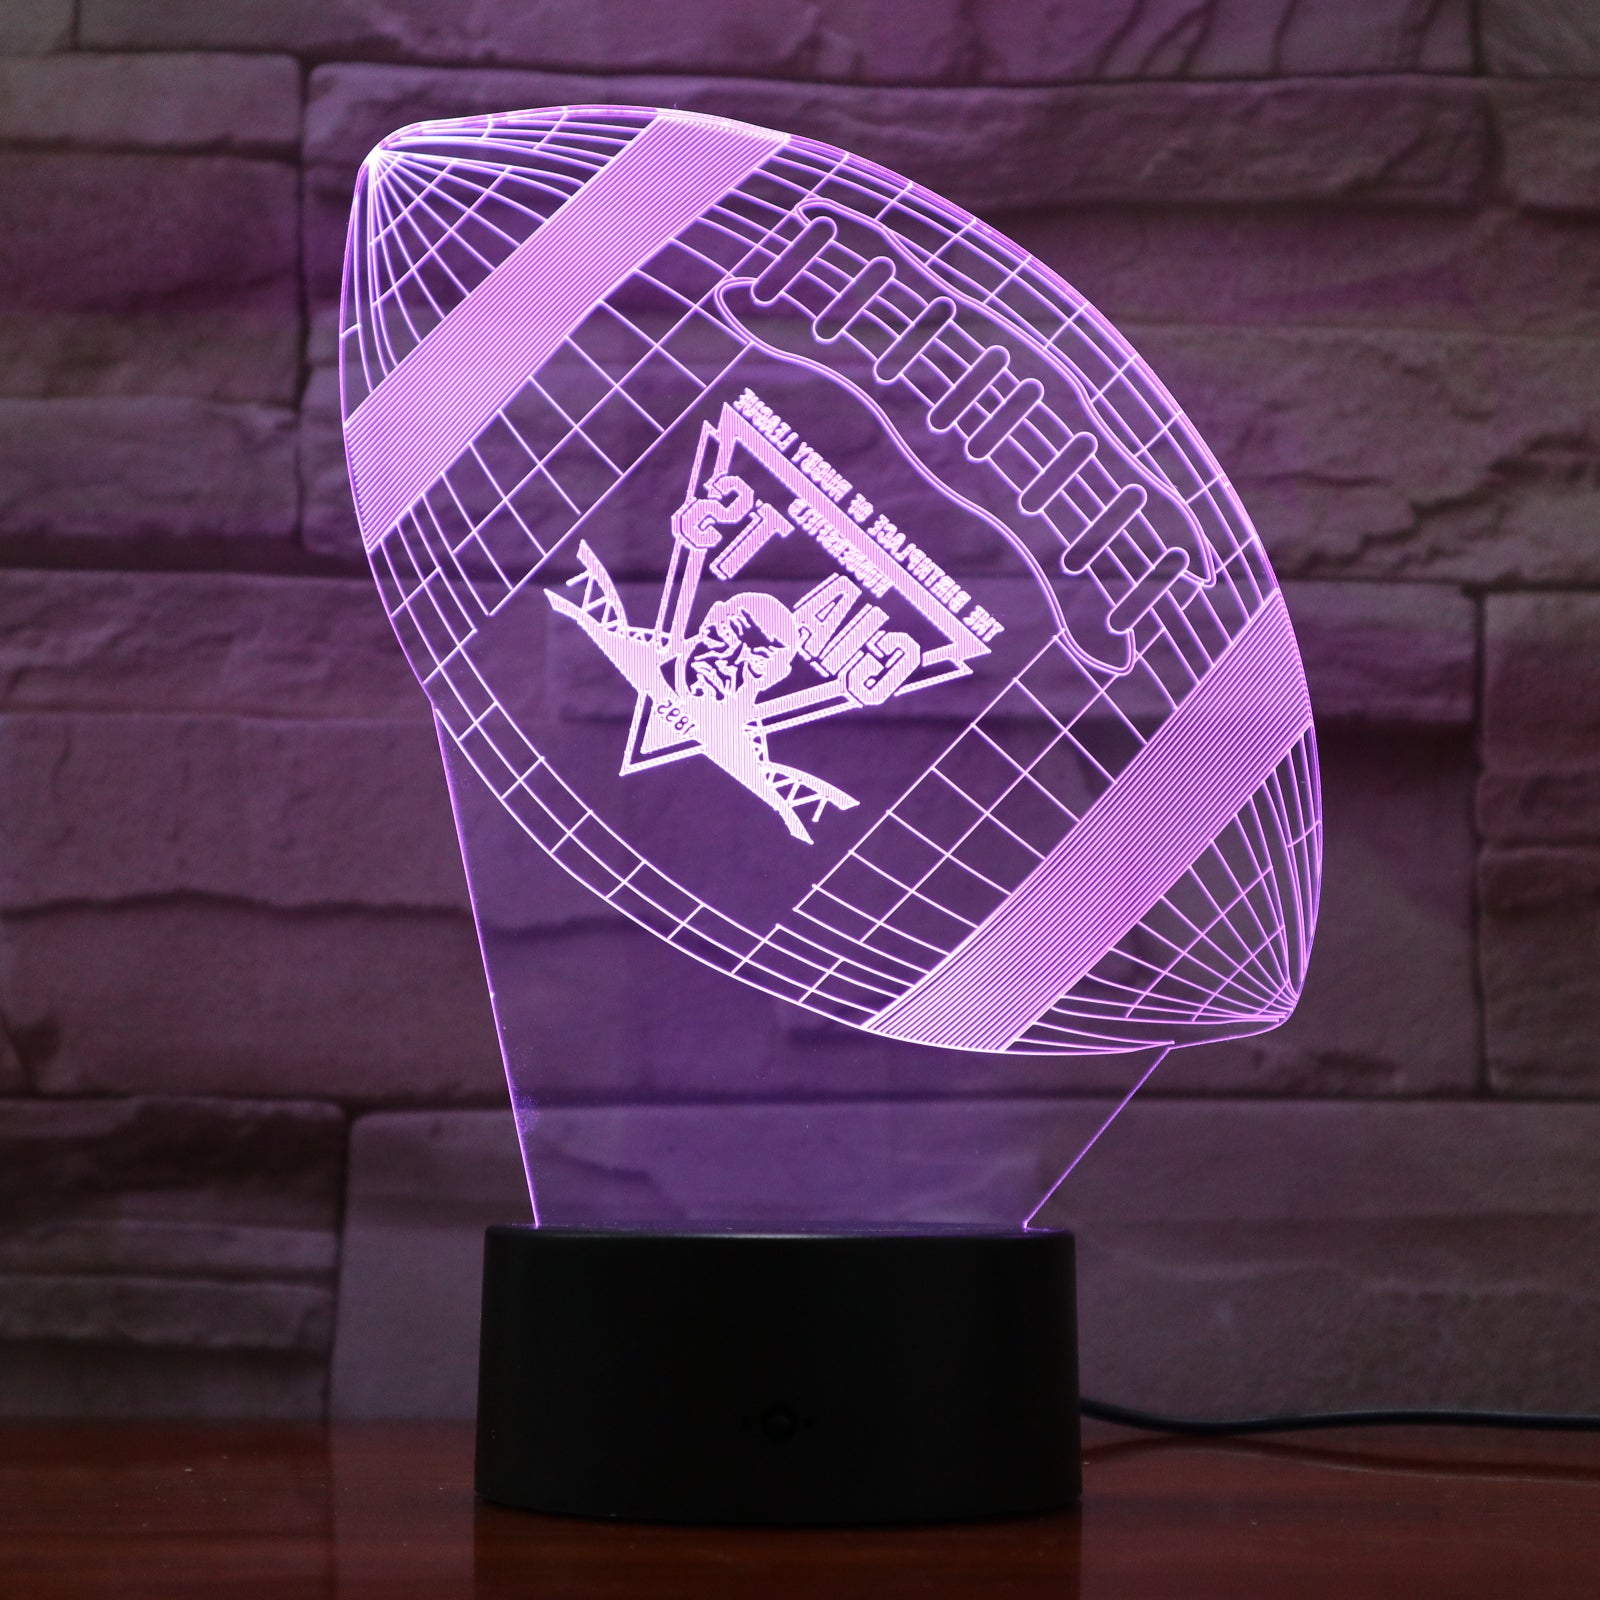 American Football 8 - 3D Optical Illusion LED Lamp Hologram